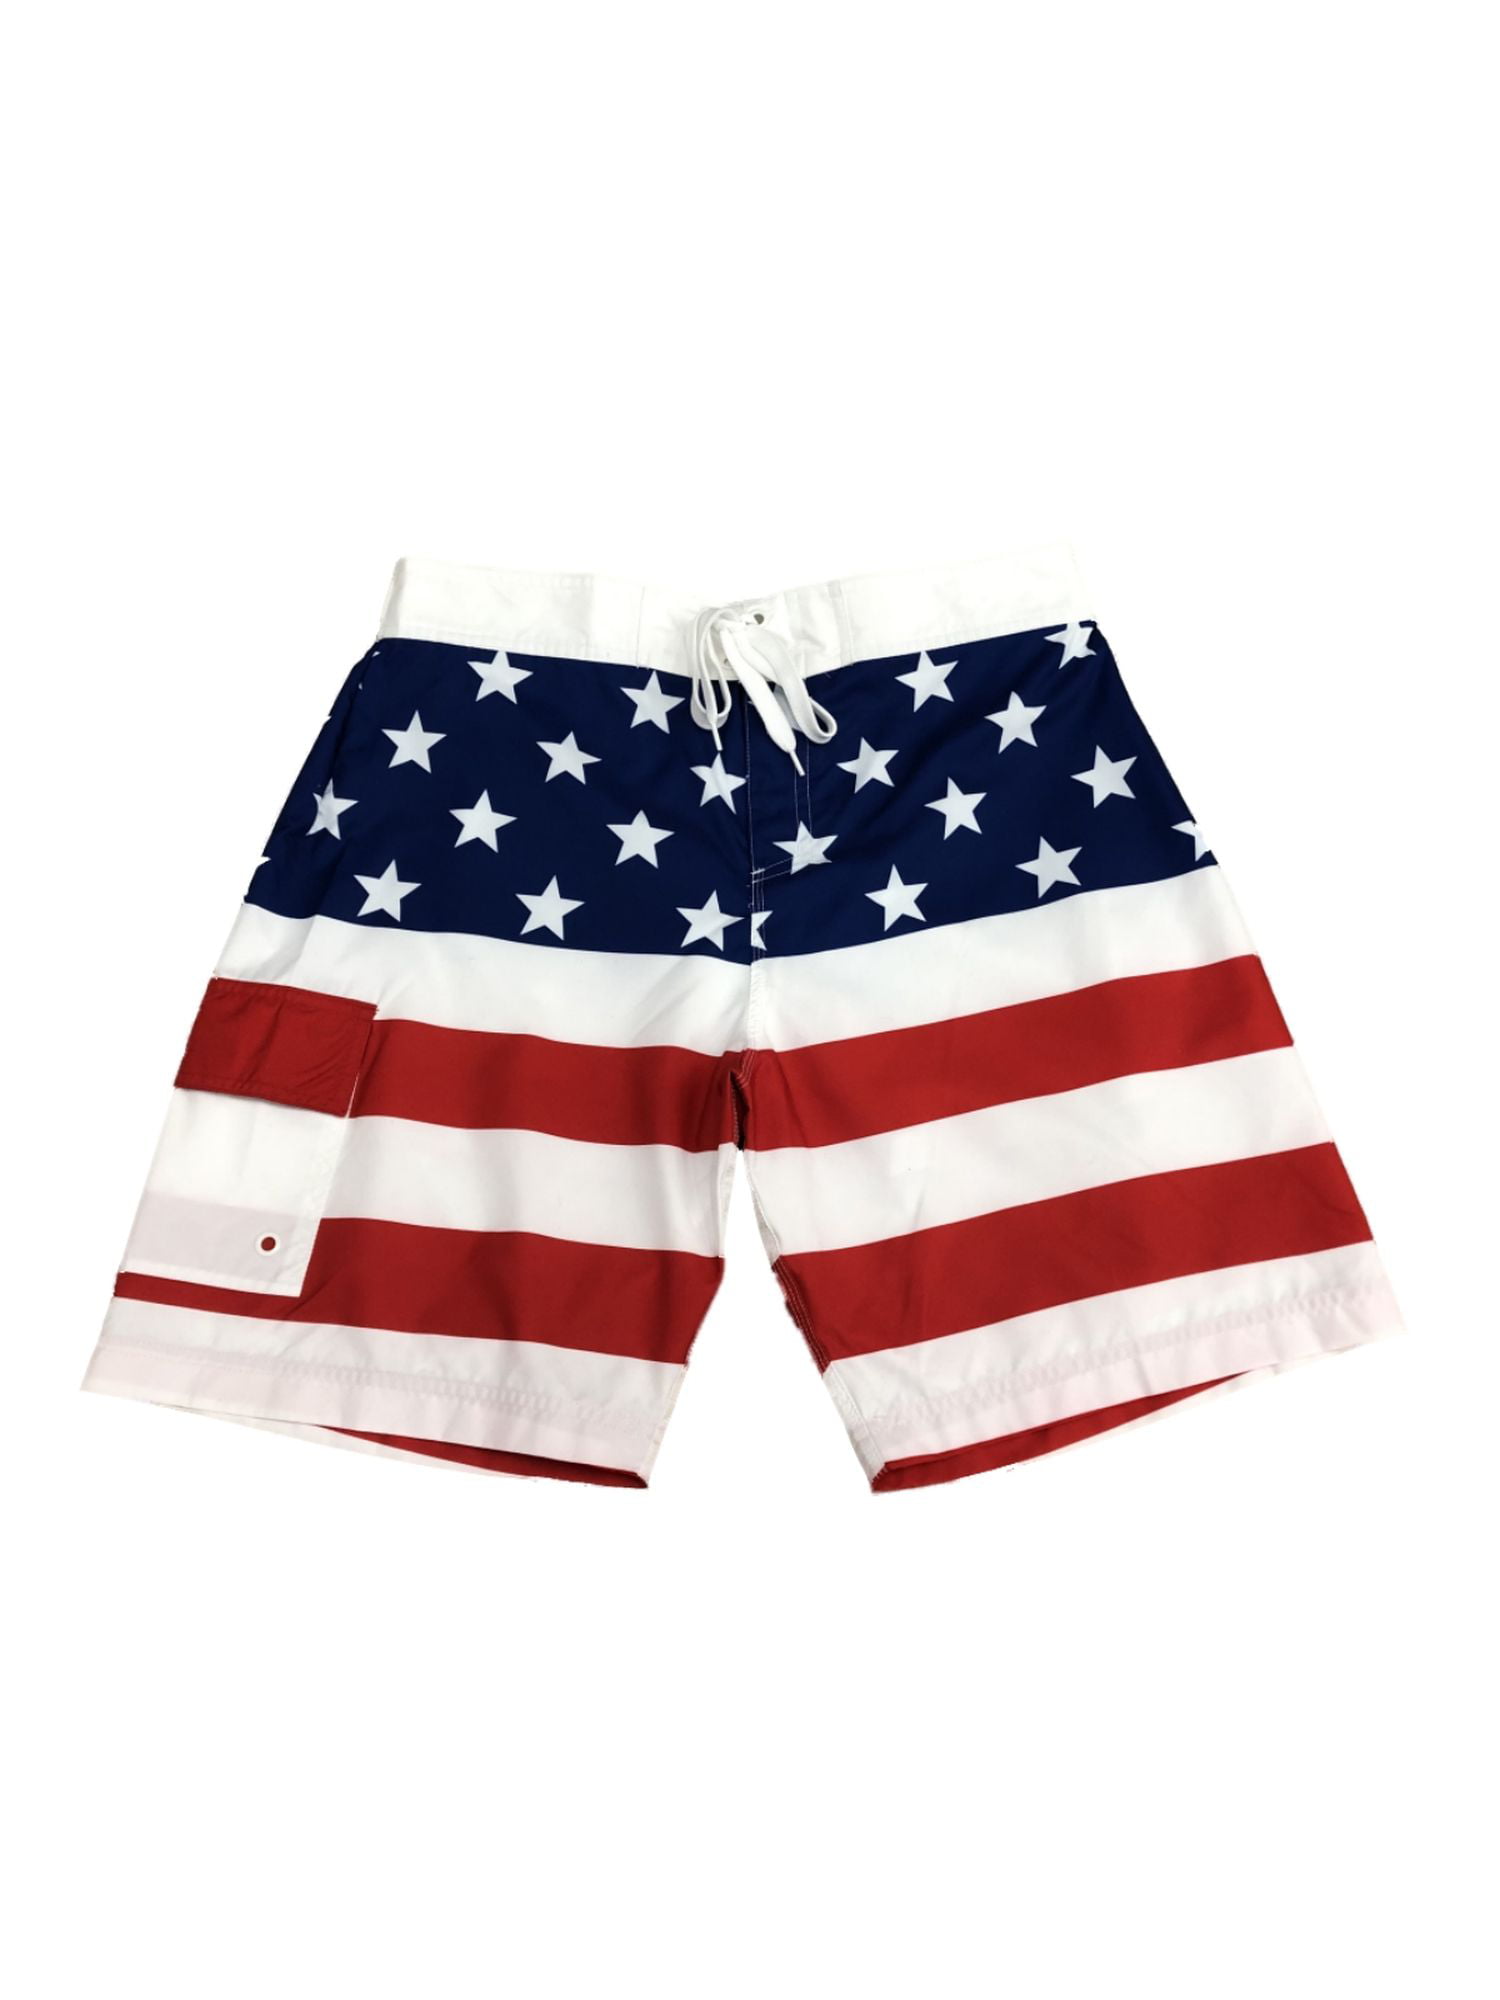 NEW American USA Shorts Stars Flag RED White Blue Sizes S-2X Drawstrings Elastic 